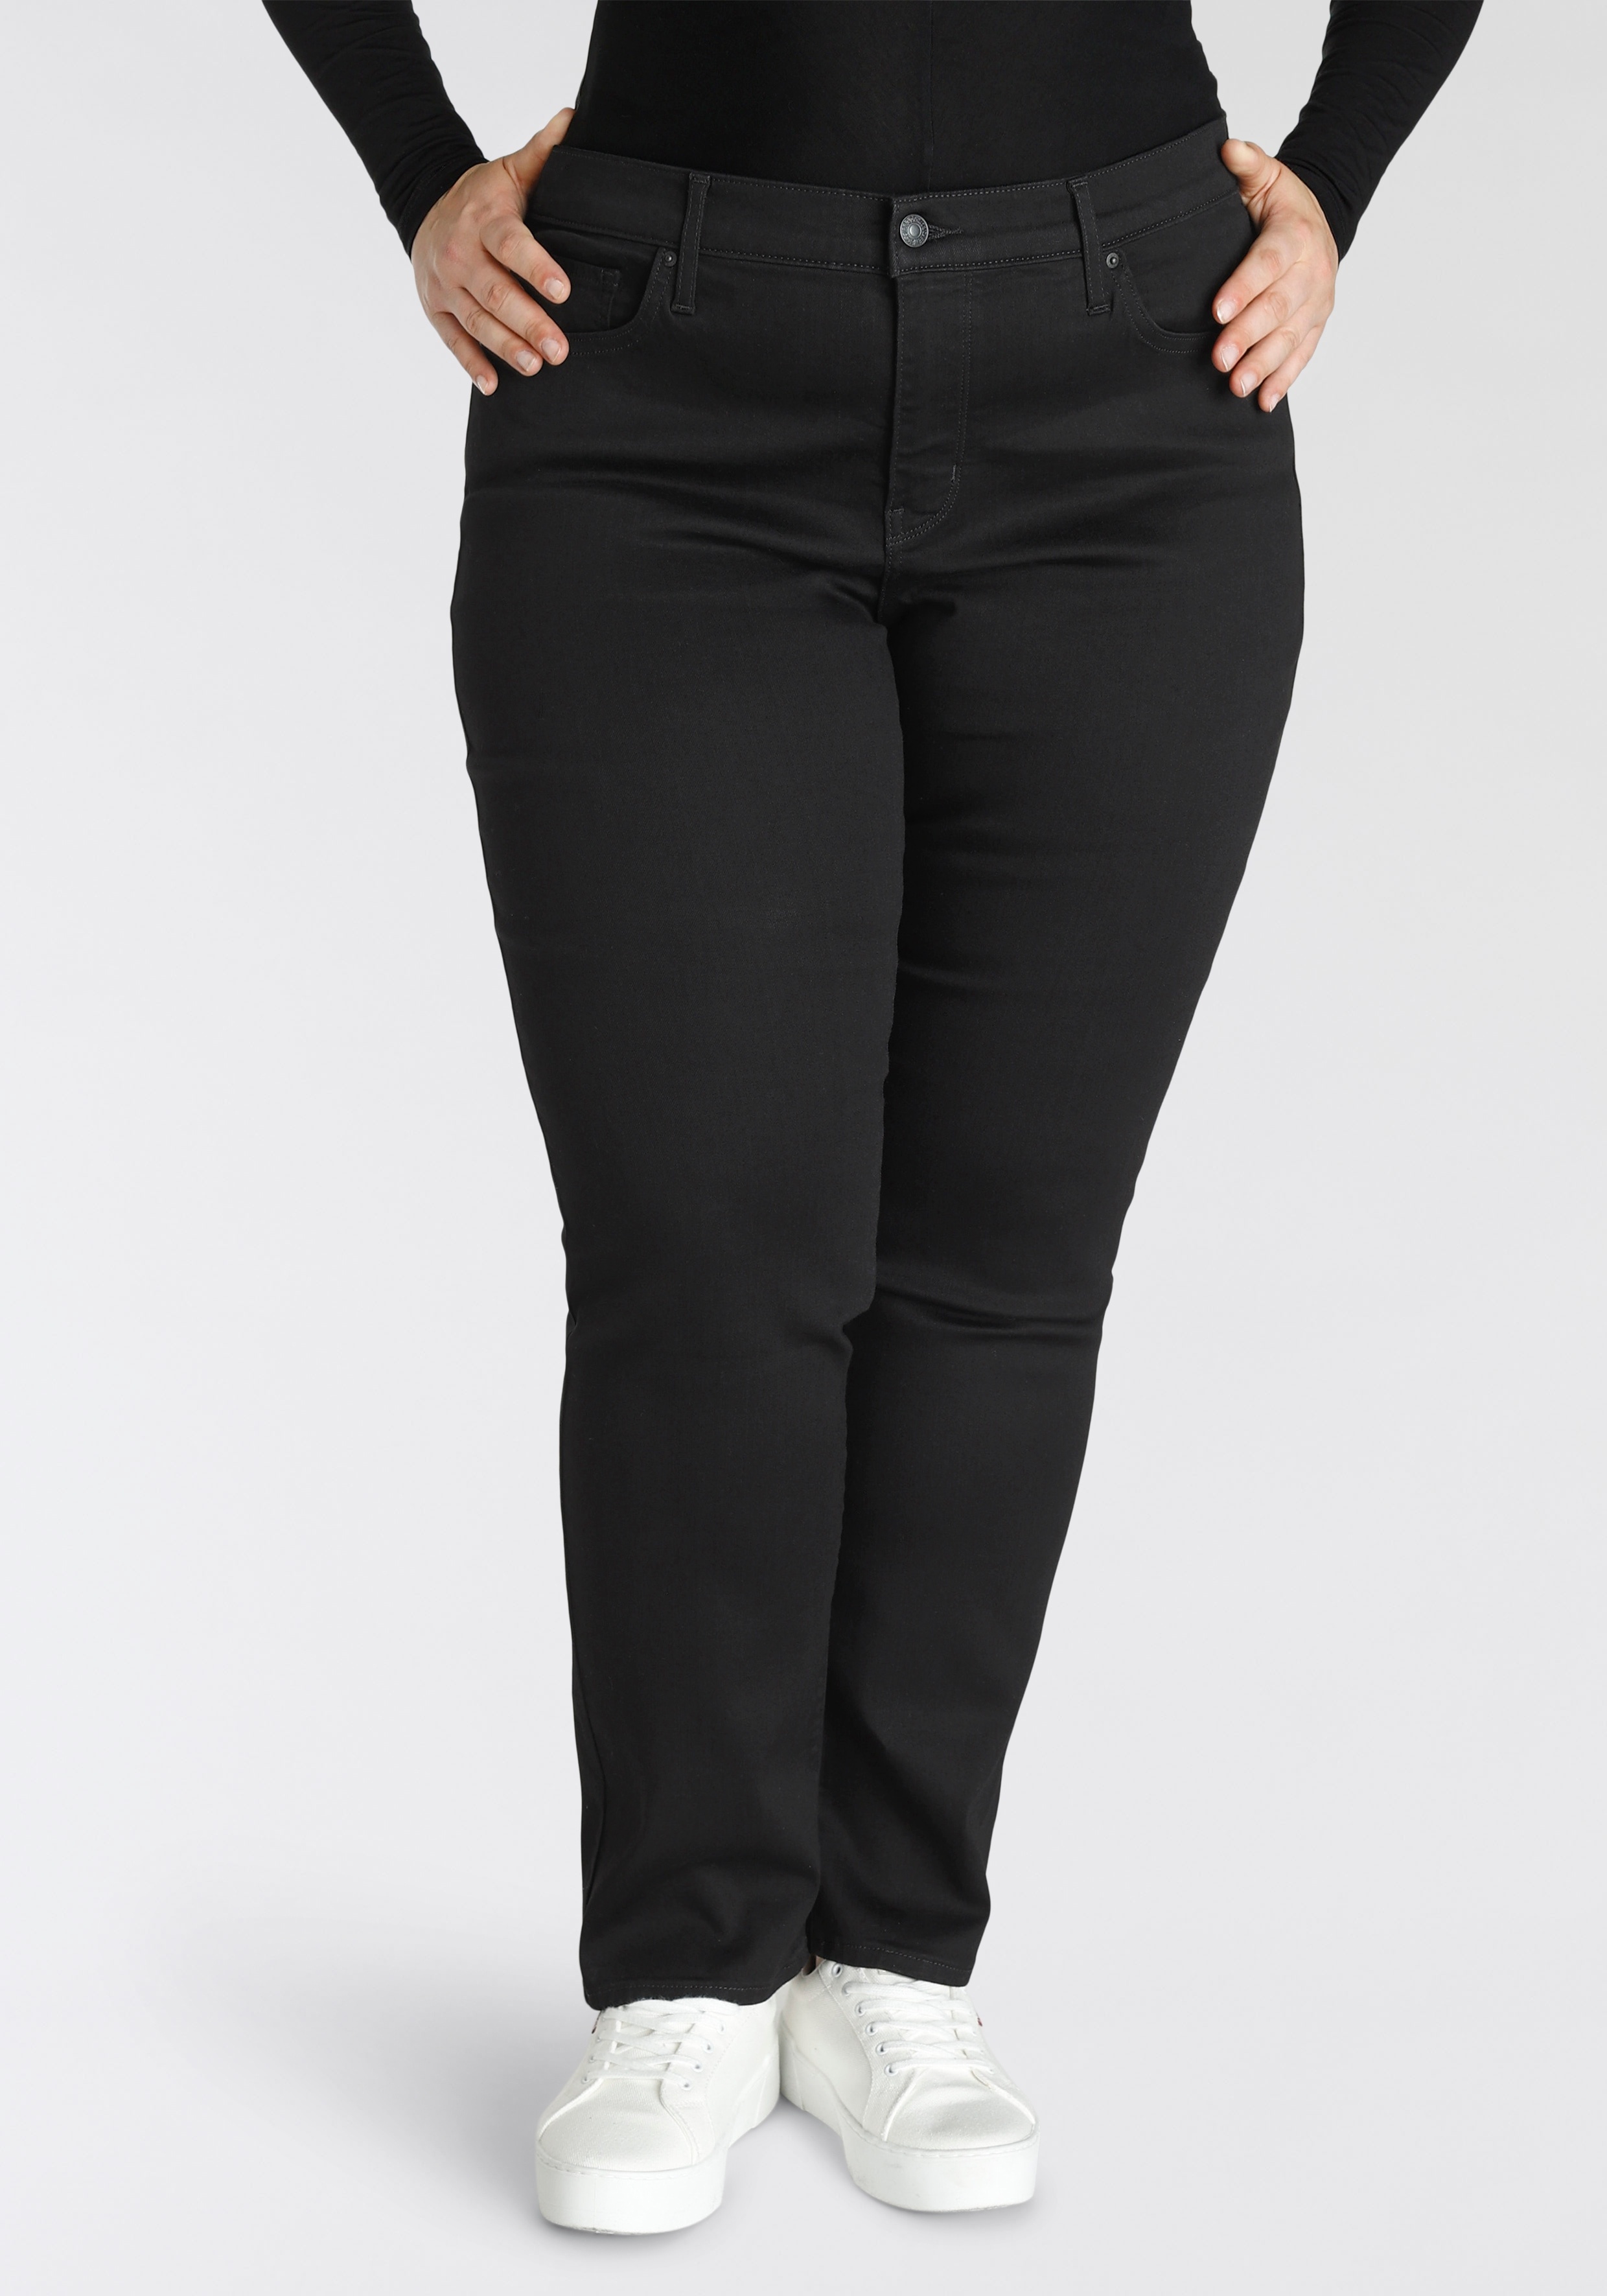 Straight-Jeans LEVI'S PLUS "314 Shaping Straight" Gr. 14 (44), Länge 34, schwarz (soft black) Damen Jeans Gerade